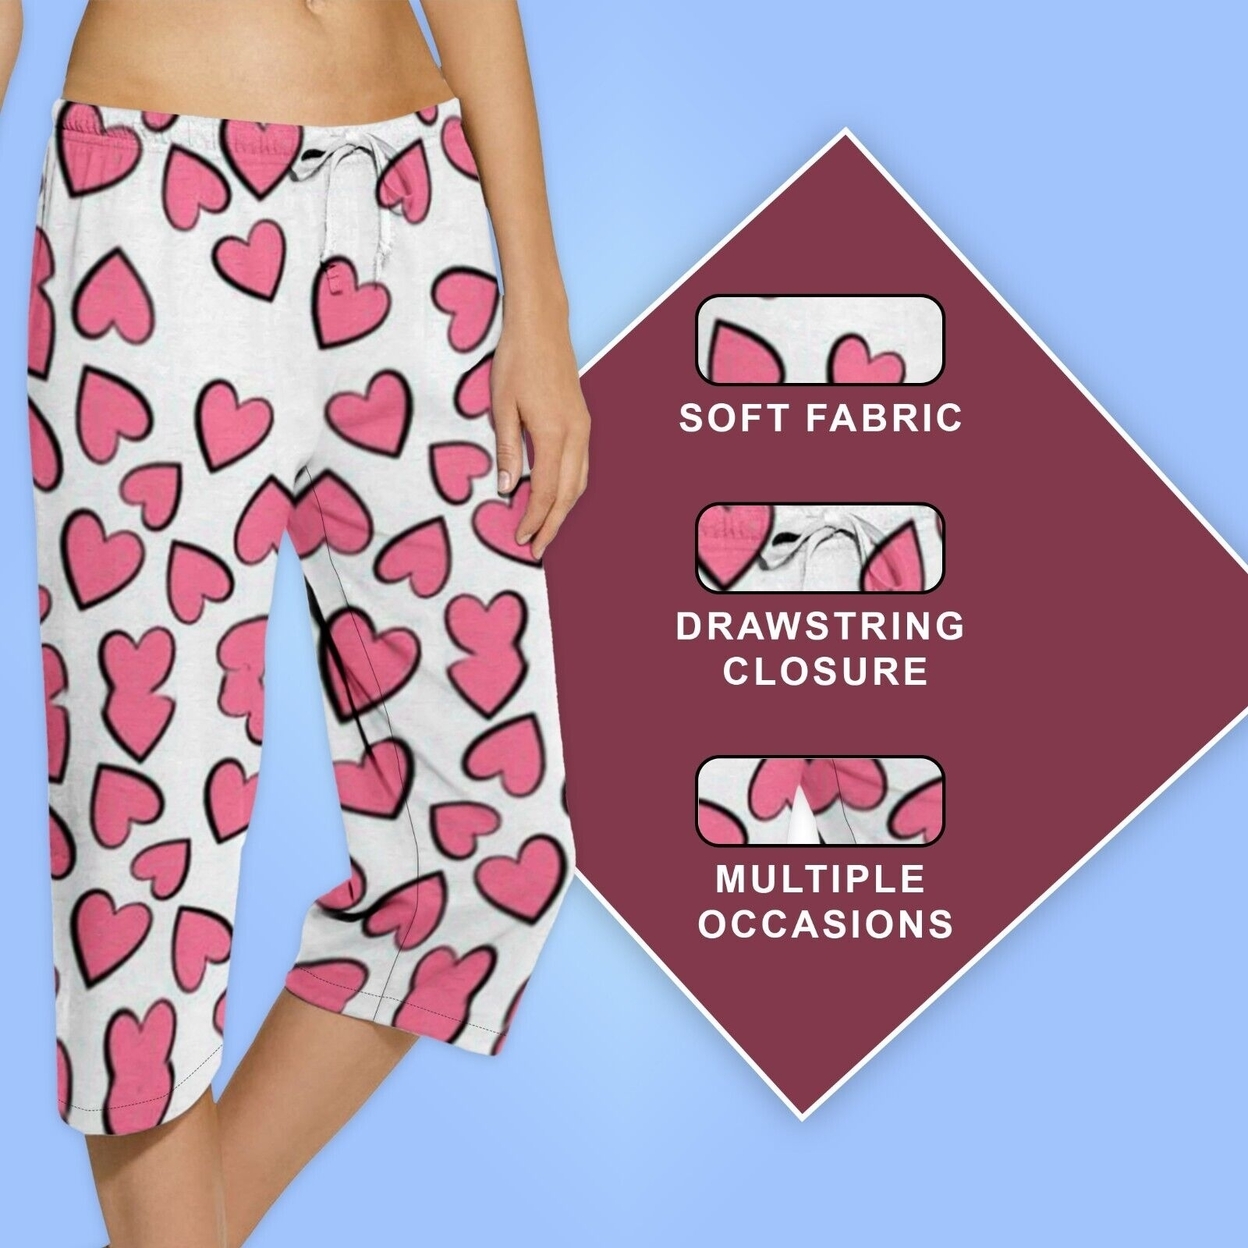 5-Pack: Women's Ultra-Soft Cozy Terry Knit Comfy Capri Sleepwear Pajama Bottoms - Small, Animal